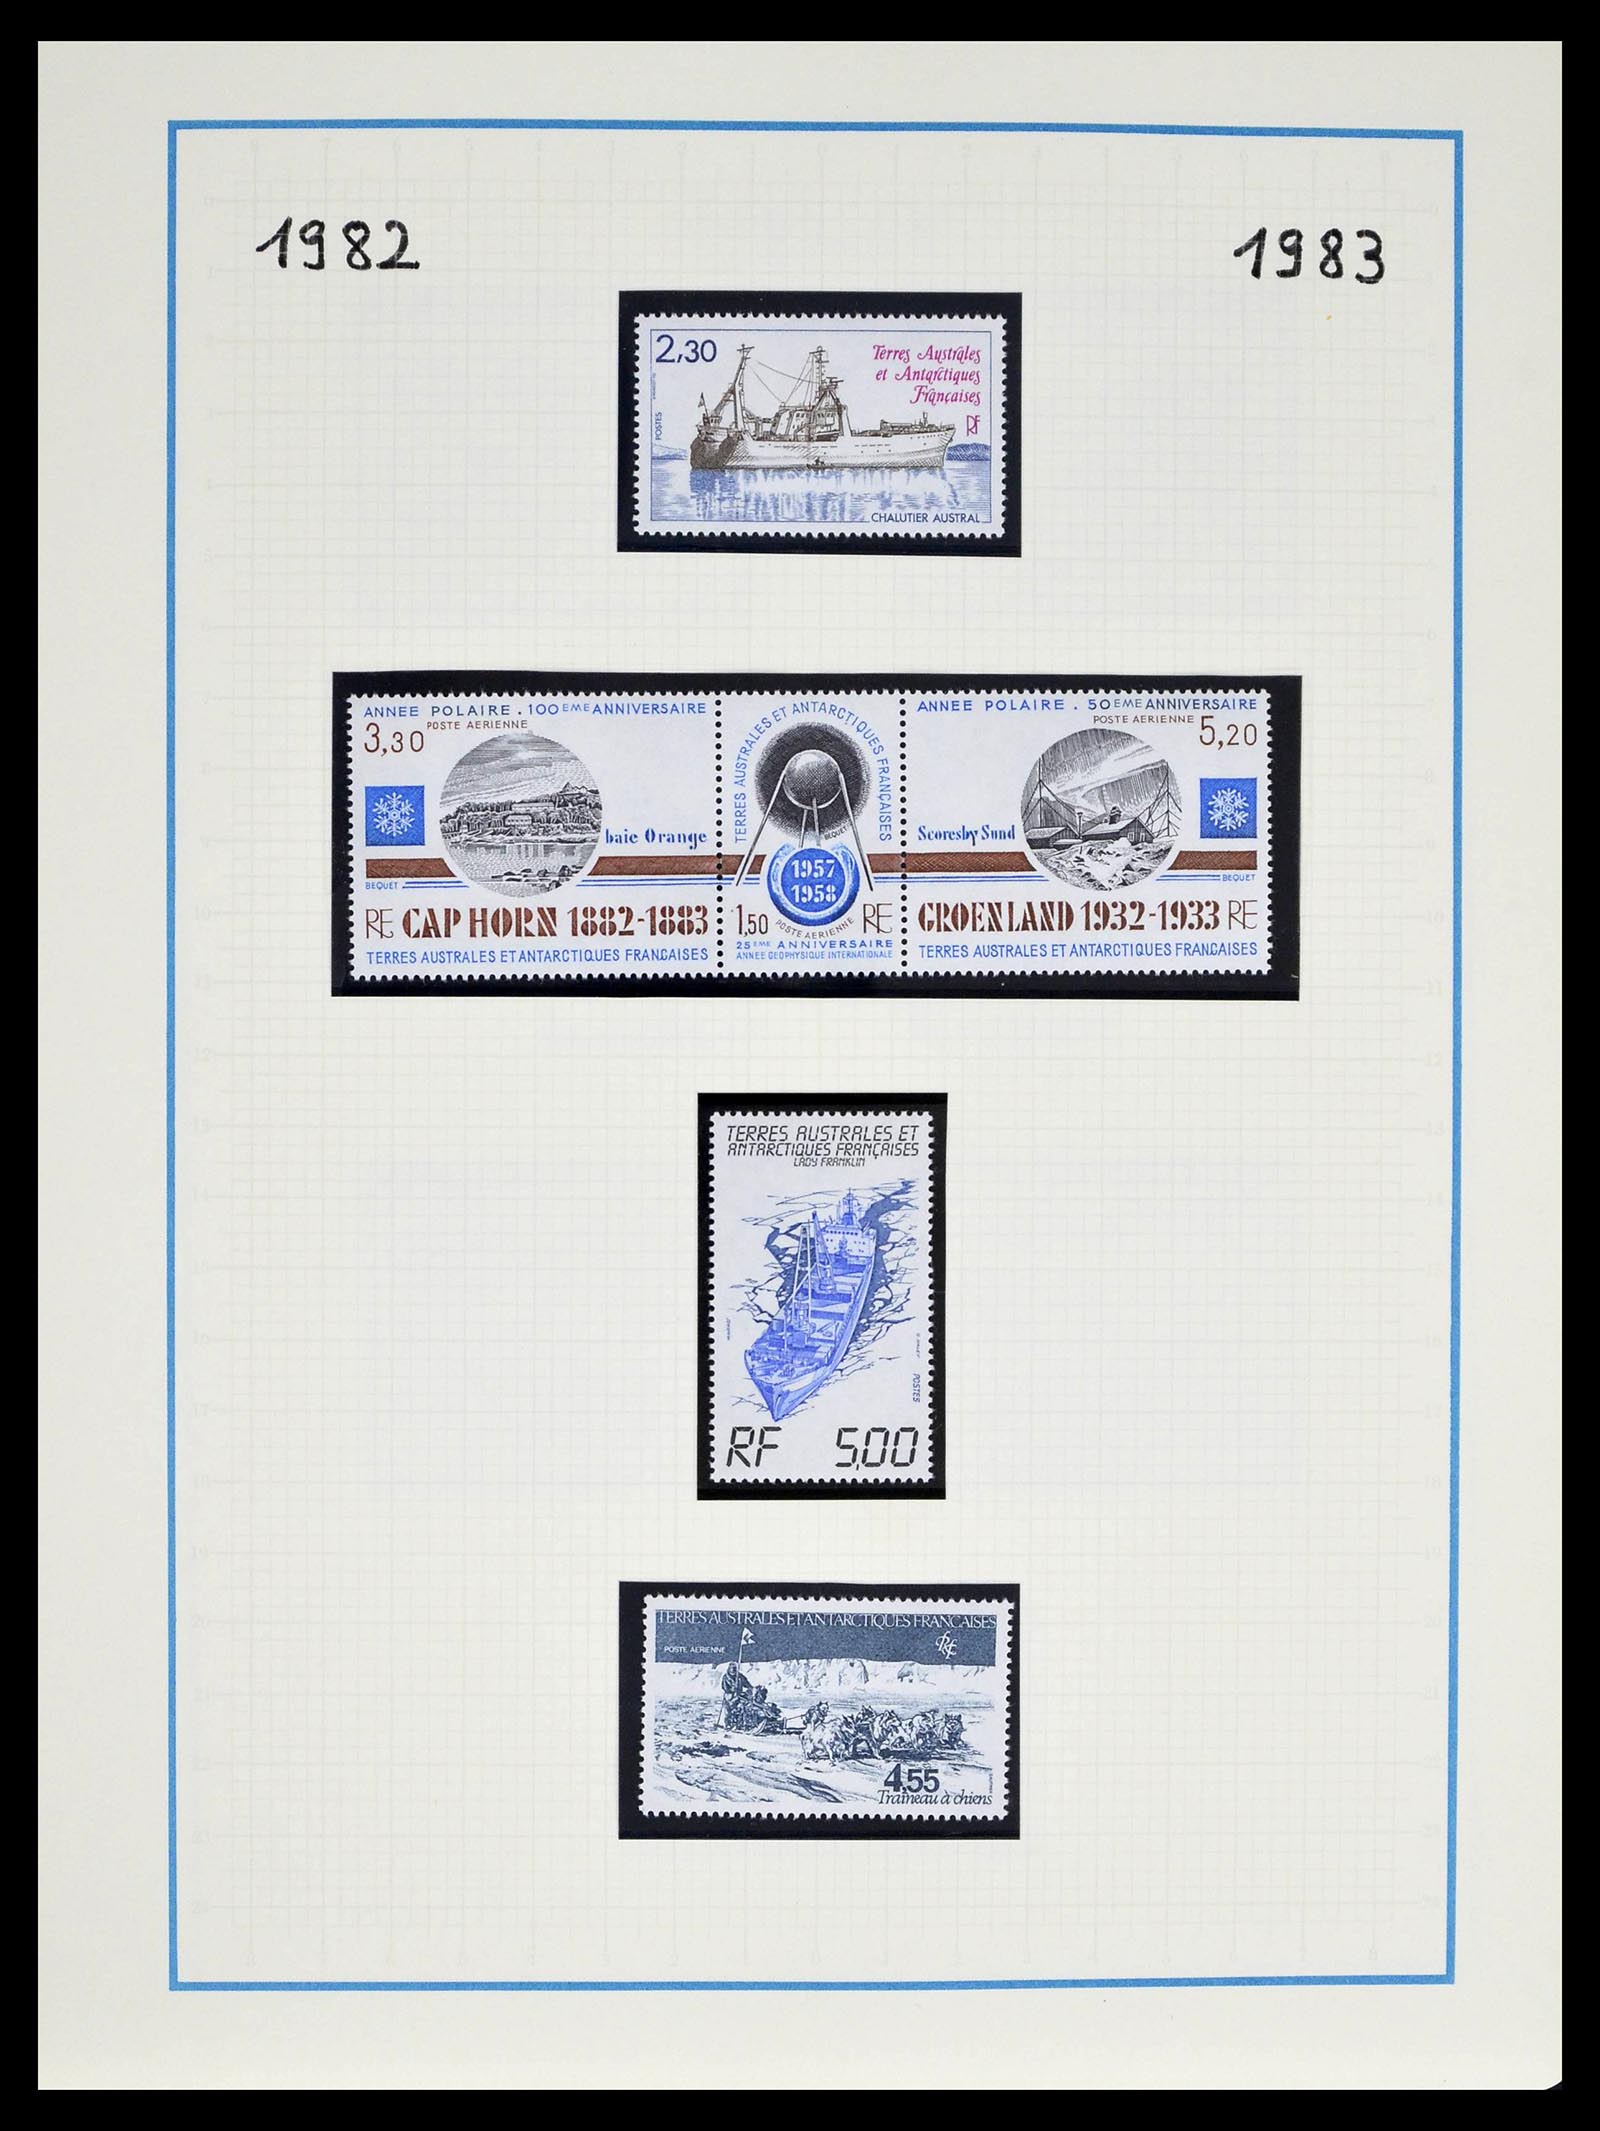 39398 0024 - Stamp collection 39398 Antarctica 1908-1984.